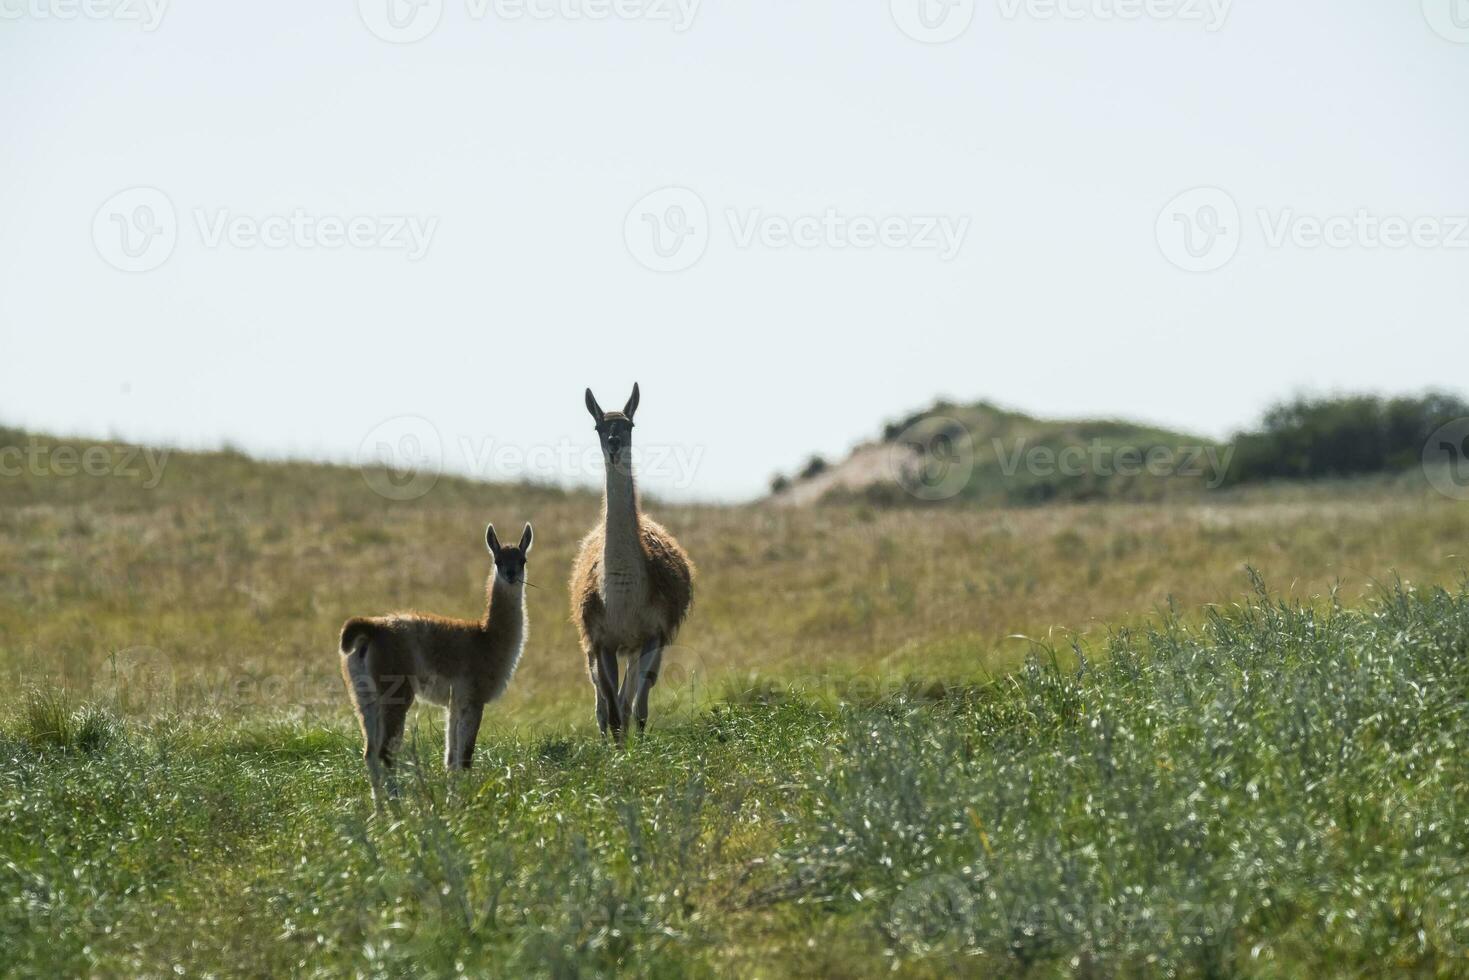 Guanacos in Pampas grassland environment, La Pampa province, Patagonia, Argentina. photo